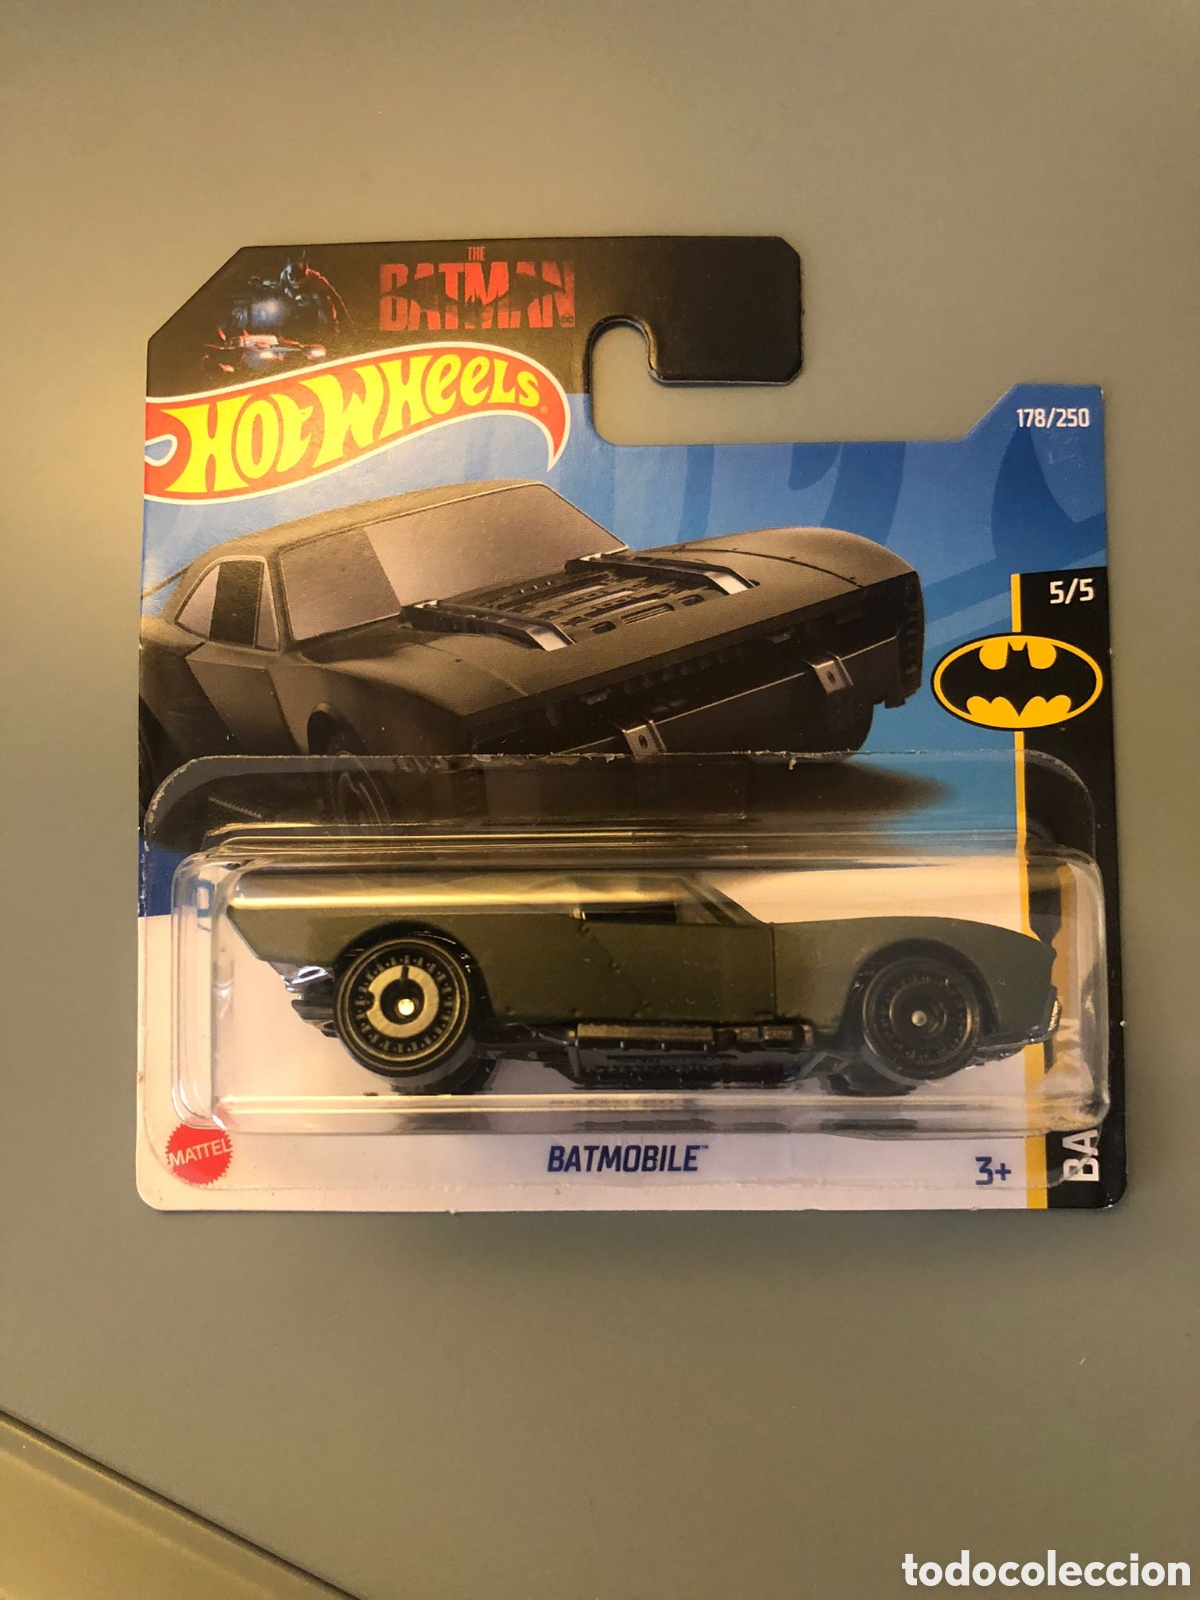 Carrinho Hot Wheels - Batman - 1/64 - Mattel - Carrinho de